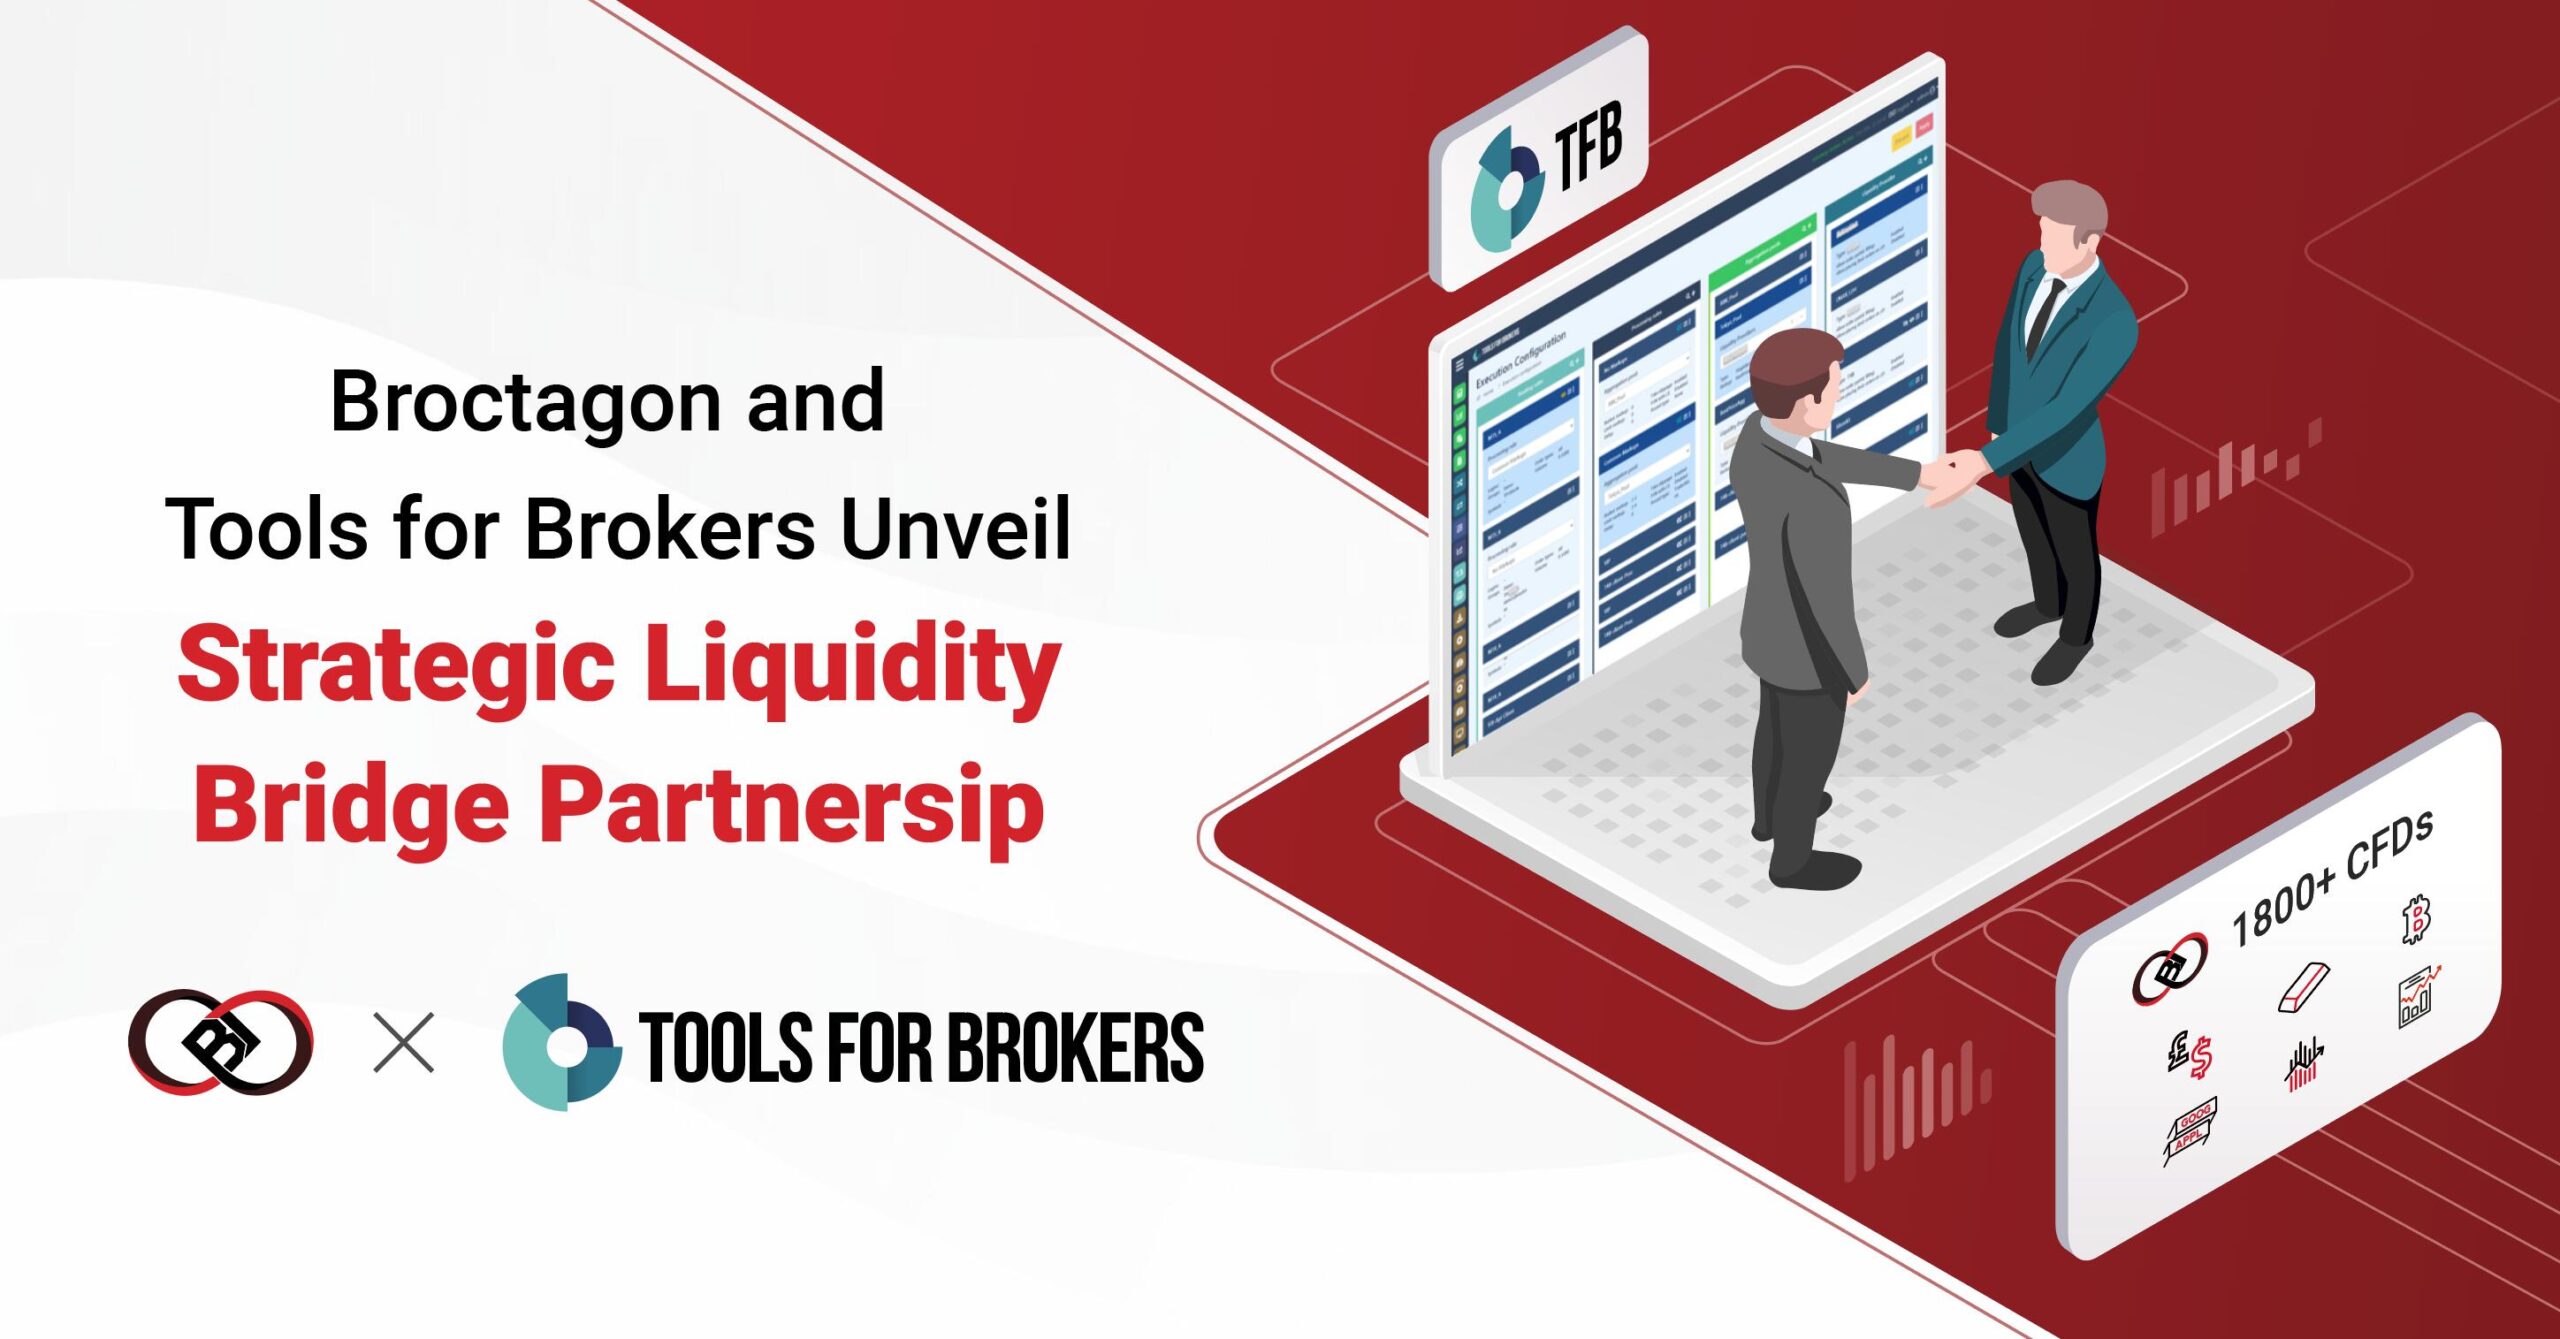 Broctagon and Tools for Brokers Unveil Strategic Liquidity Bridge Partnership